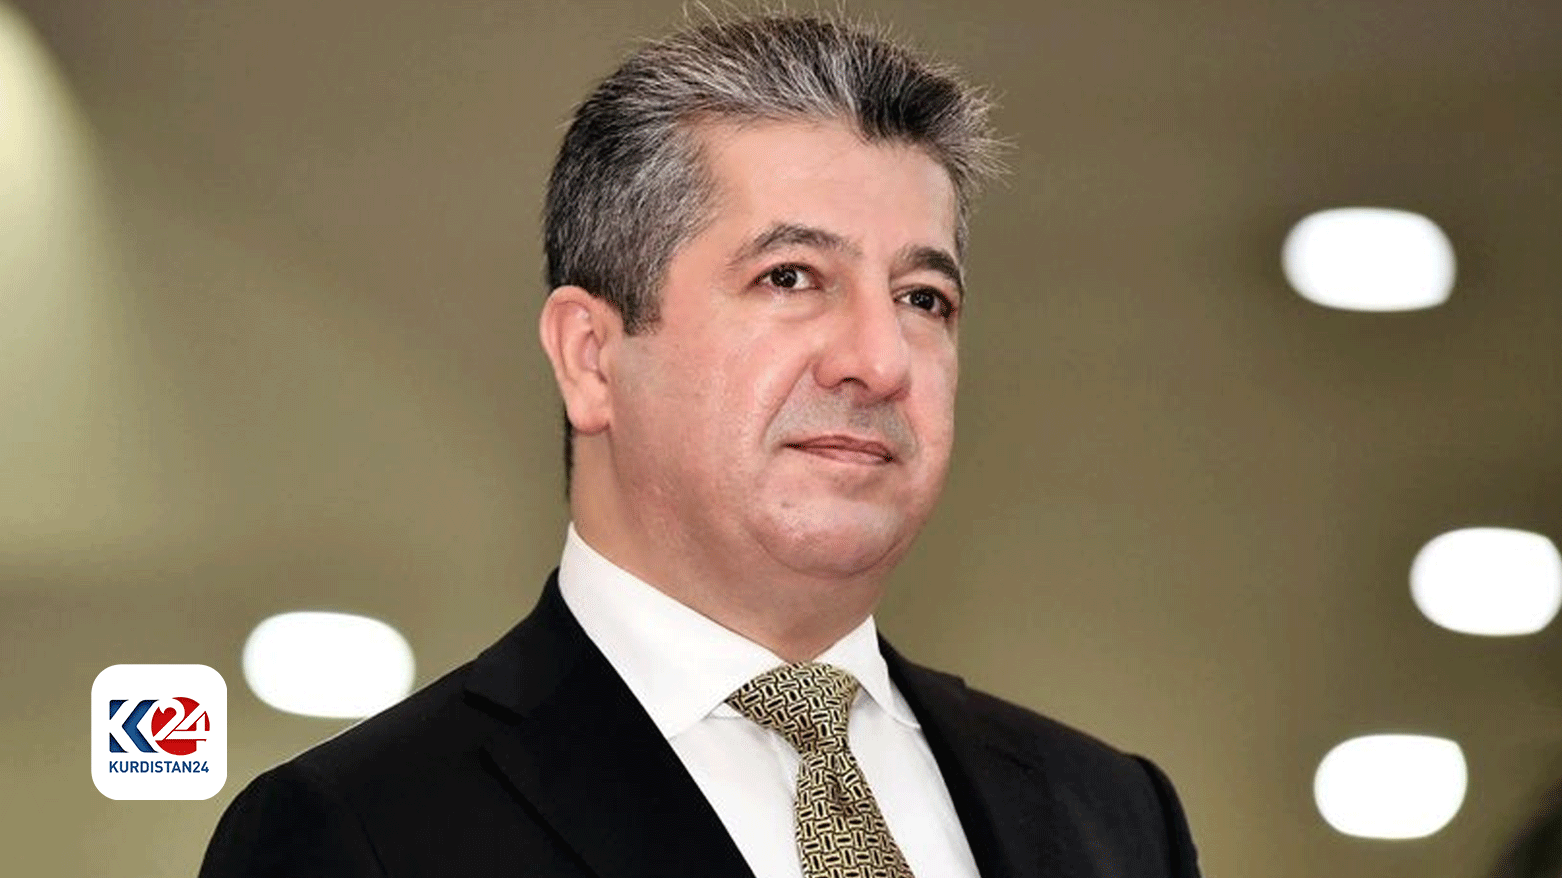 The Vice President of the Kurdistan Democratic Party (KDP), Masrour Barzani. (Photo: KRG)